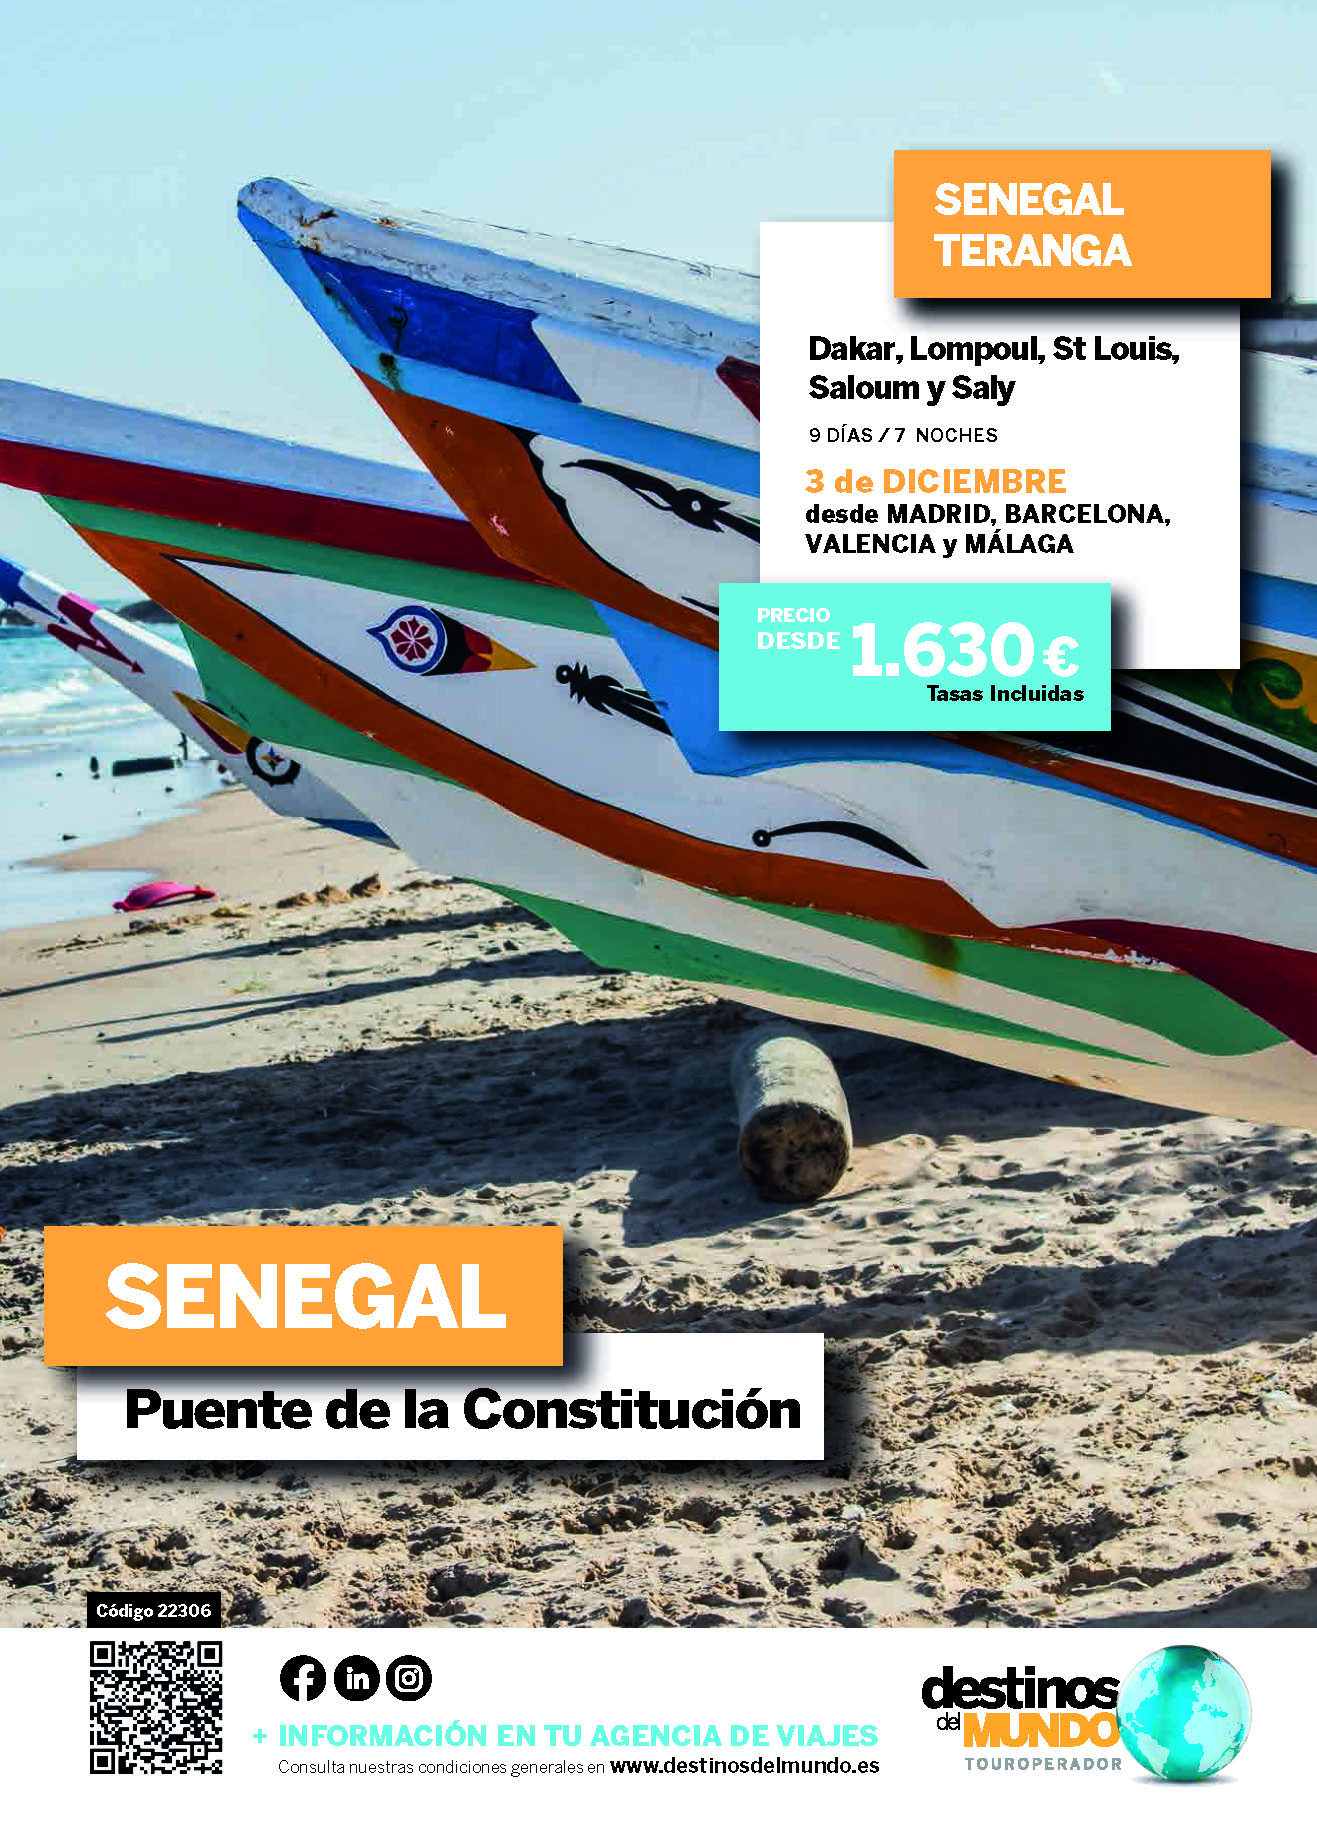 Oferta Destinos del Mundo Puente de Diciembre 2023 circuito Senegal Teranga 9 dias salidas desde Madrid Barcelona Malaga Valencia